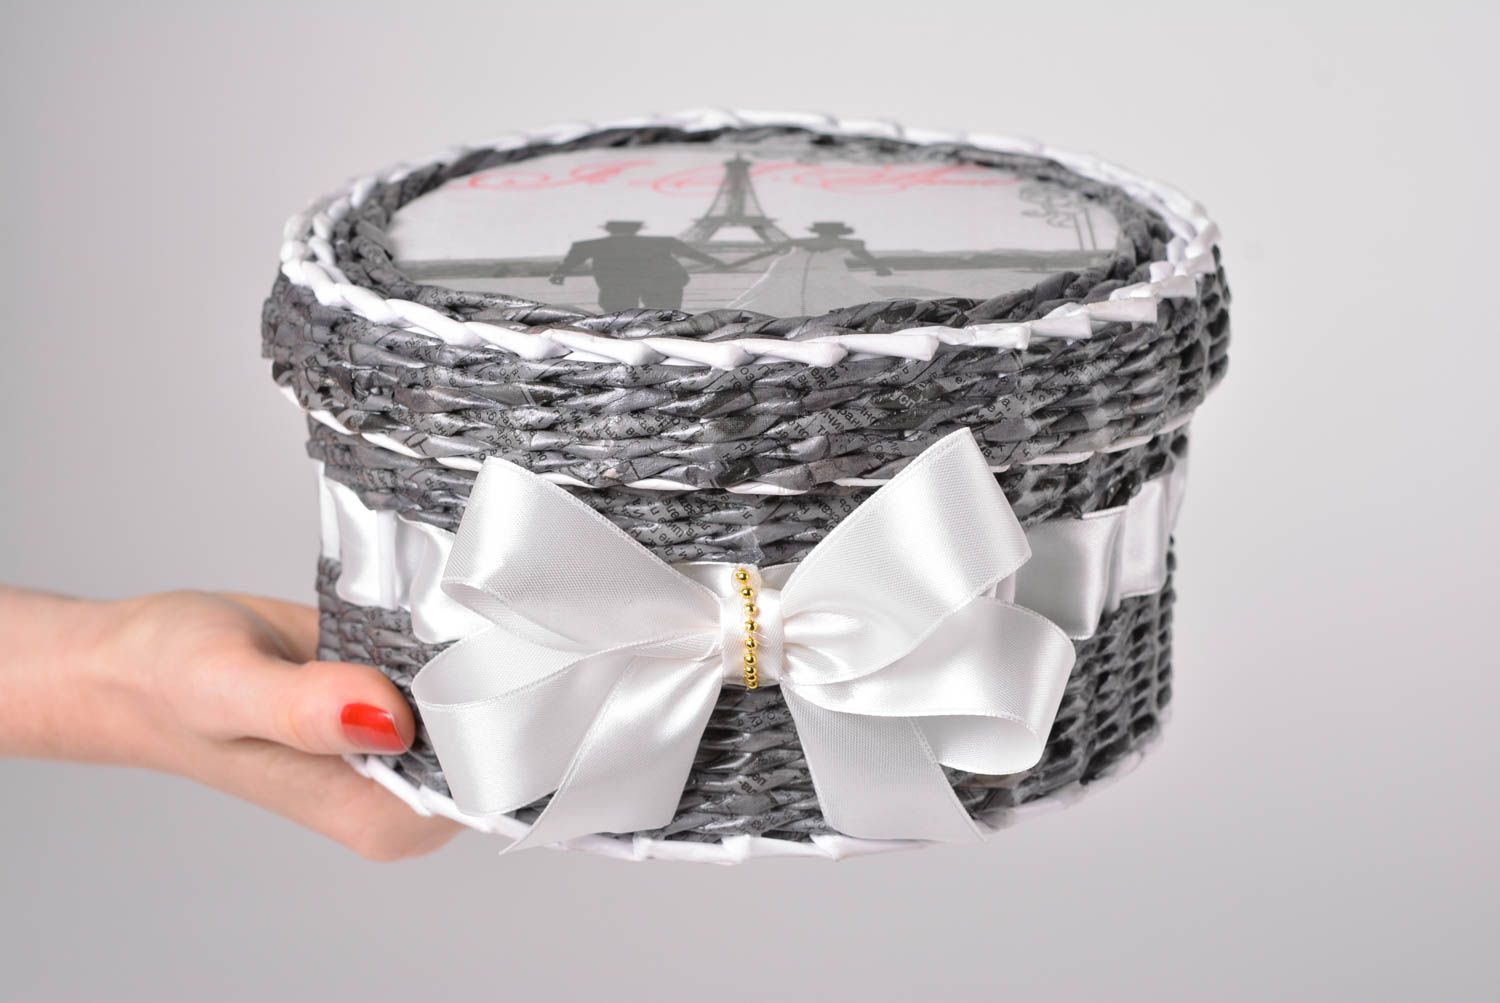 Handmade decorative paper basket woven basket interior decorating gift ideas photo 3